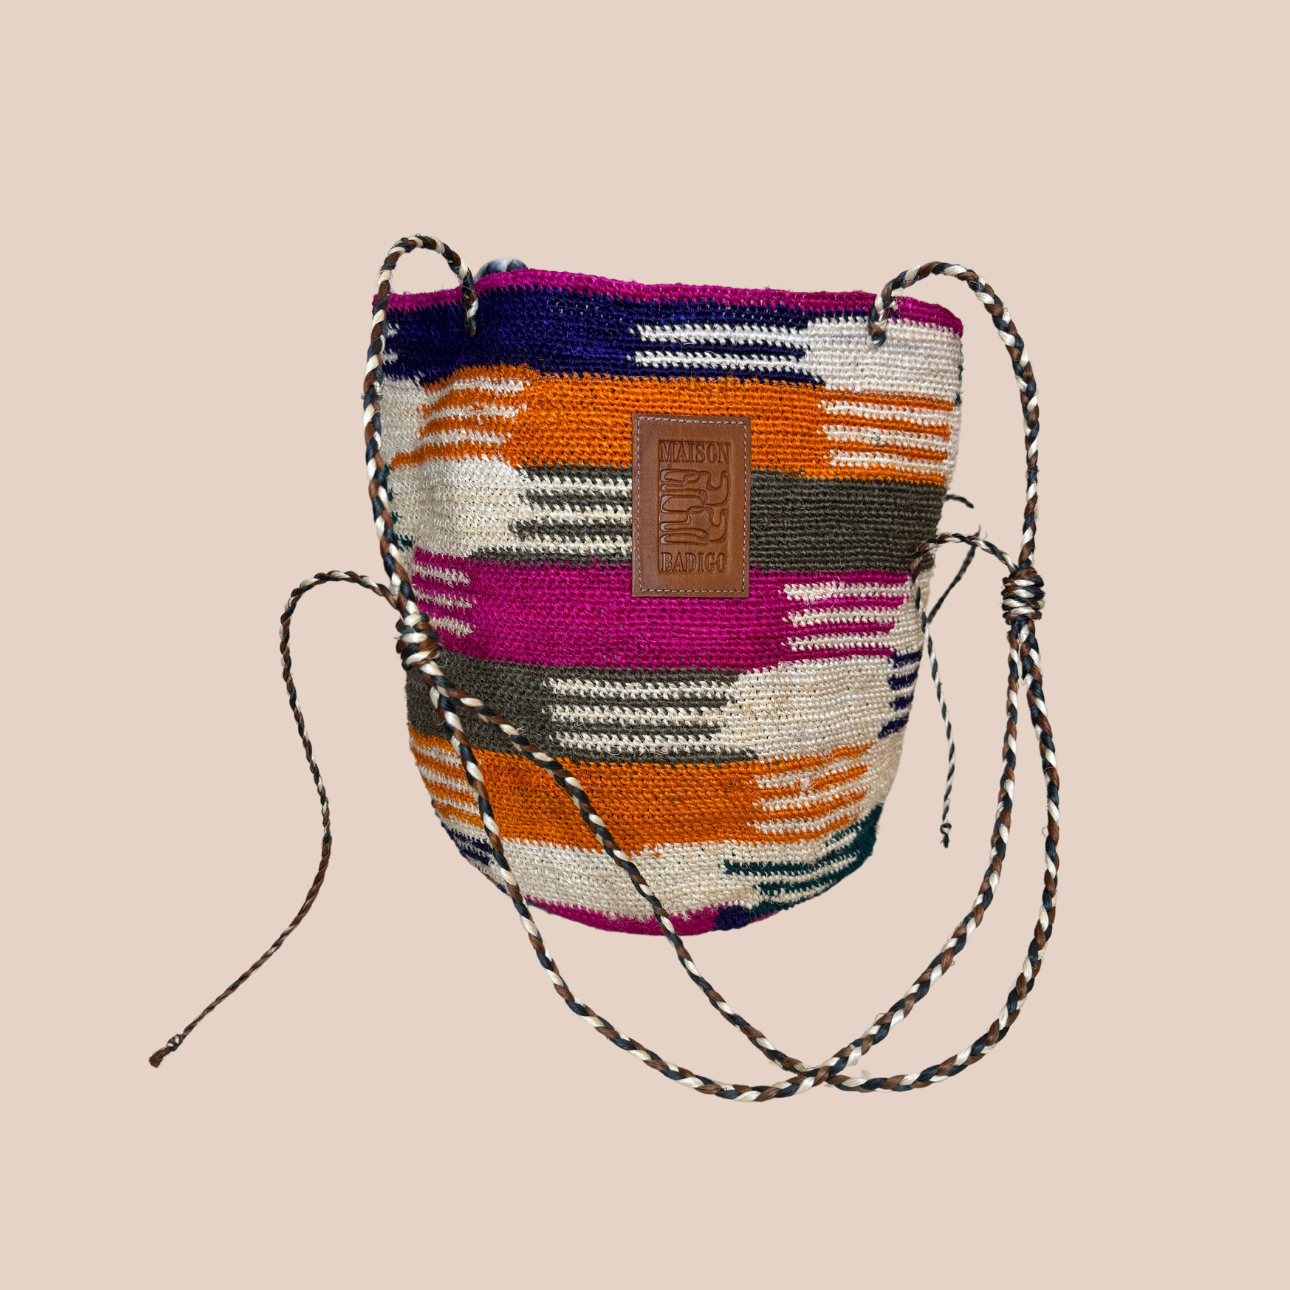 Image du sac ROSALITA doublure tie&dye de Maison Badigo, sac en fibres de cactus multicolore unique et tendance